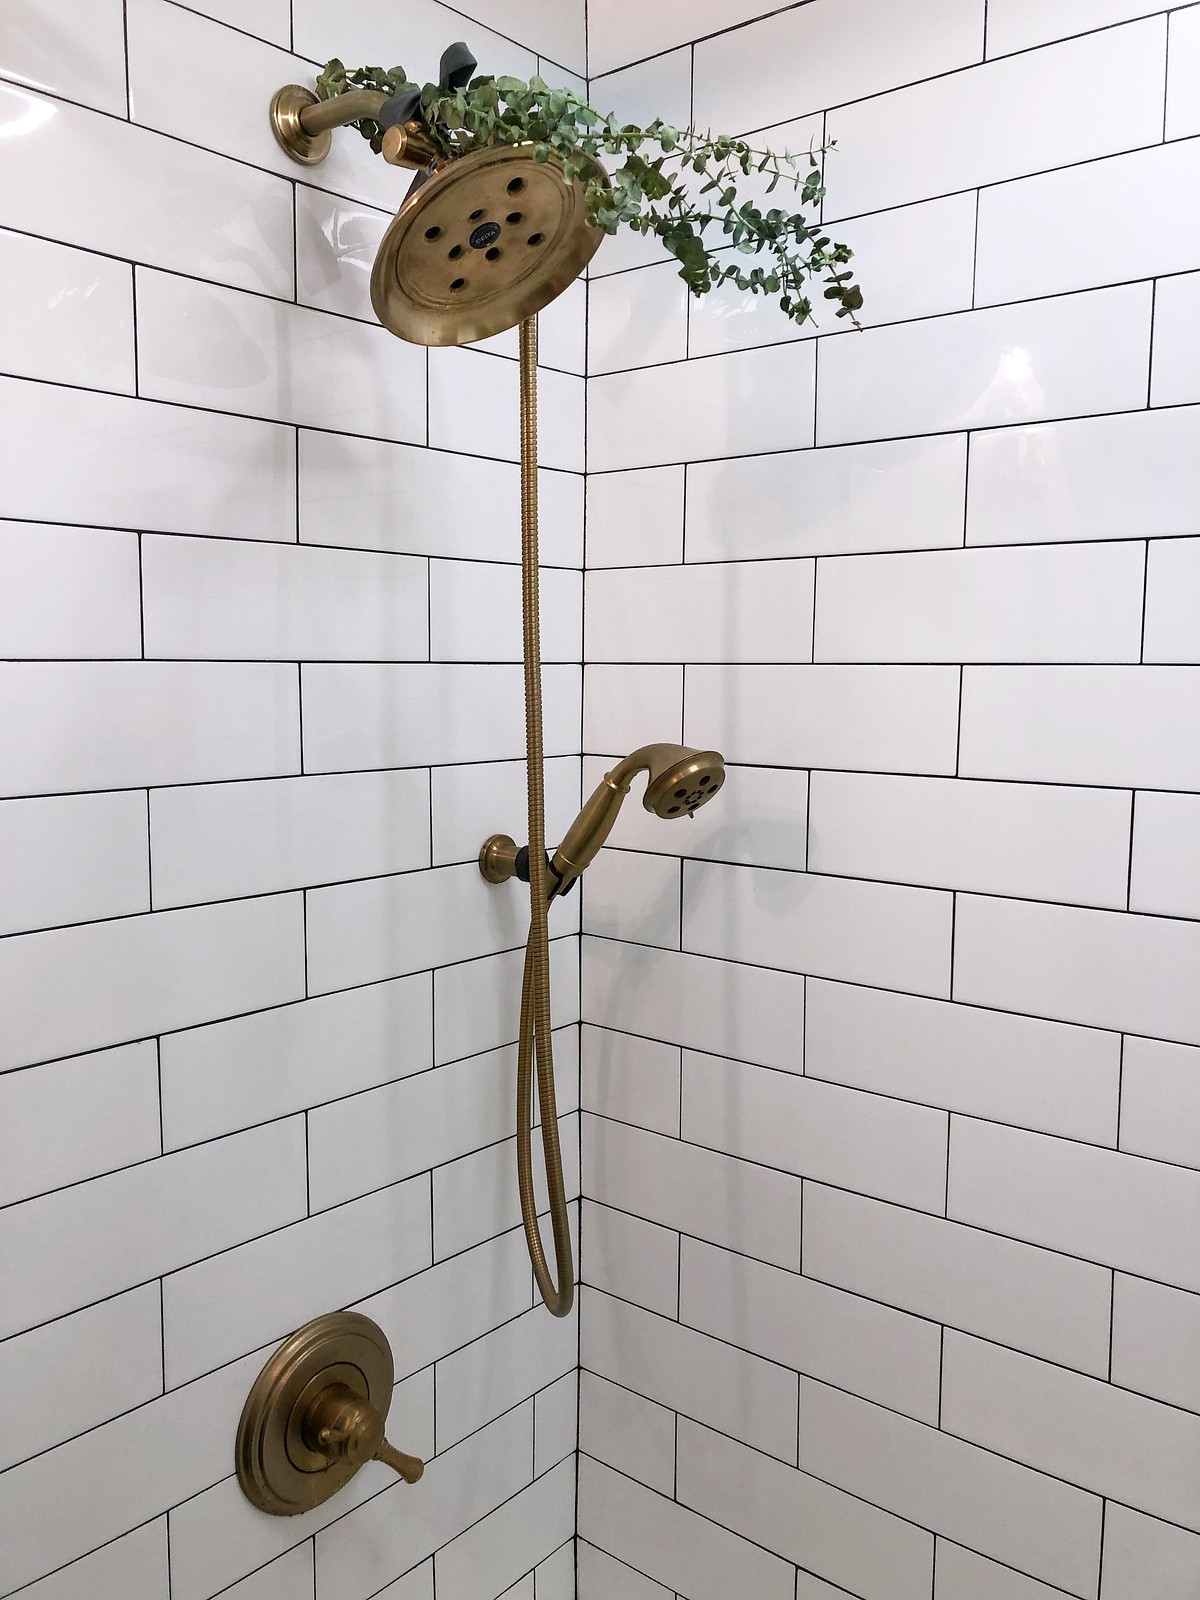 Eucalyptus in Shower Gold Hardware Faucet White Subway Tile Black Grout